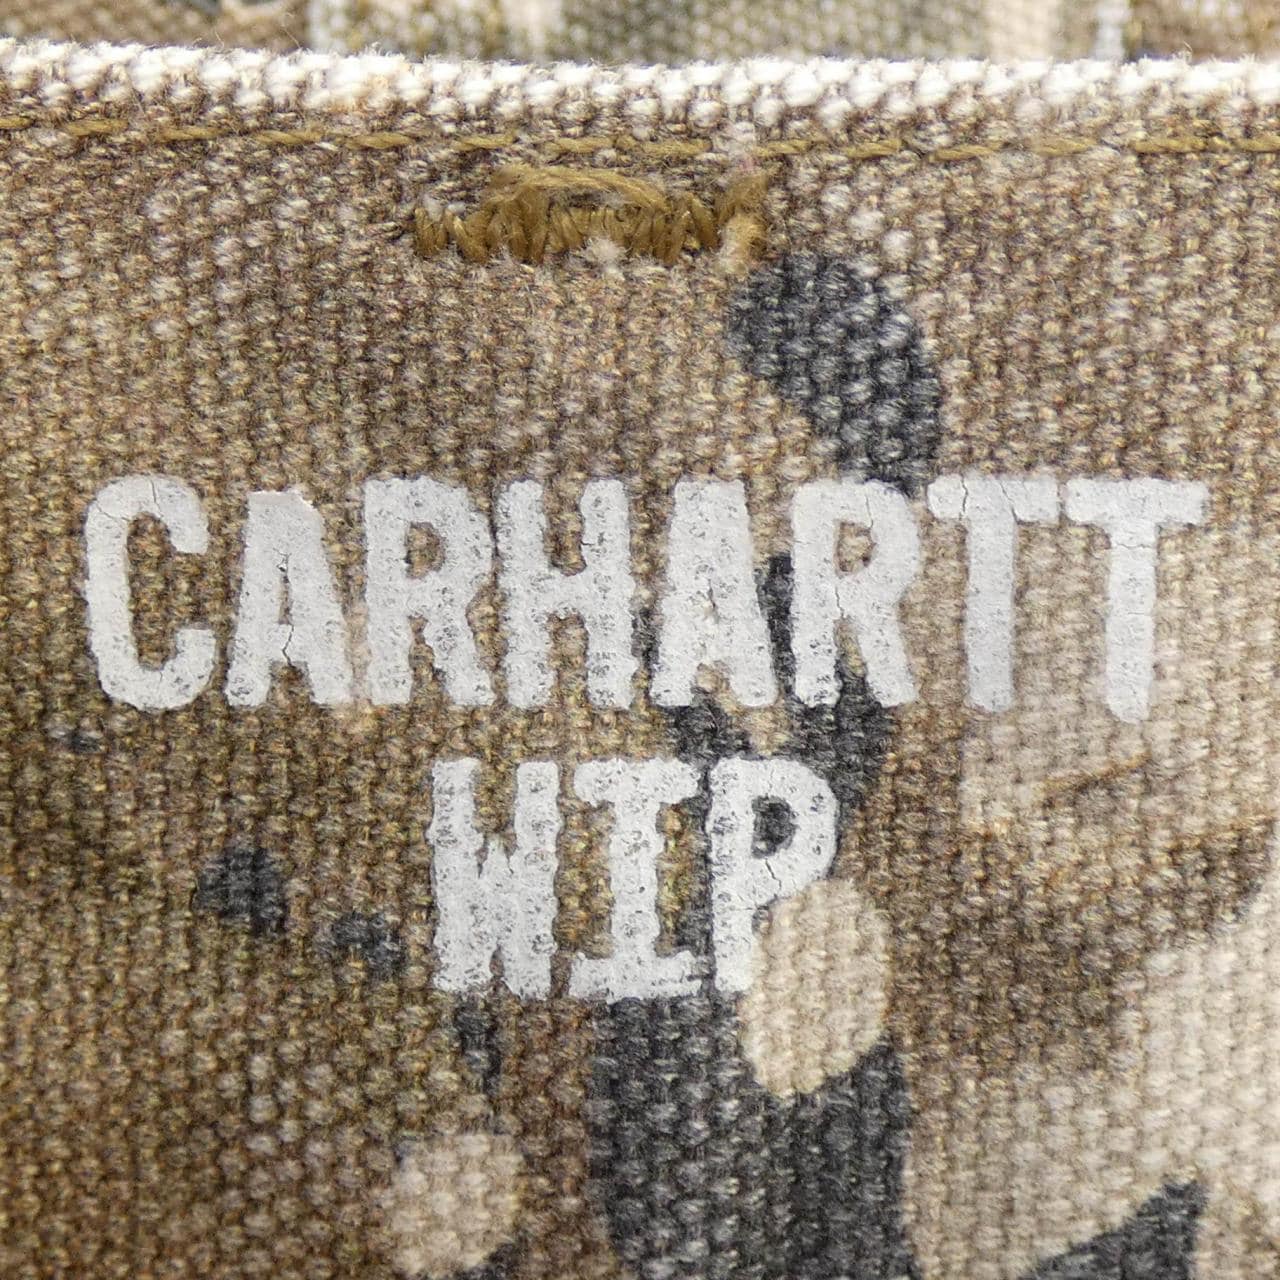 Carhartt pants